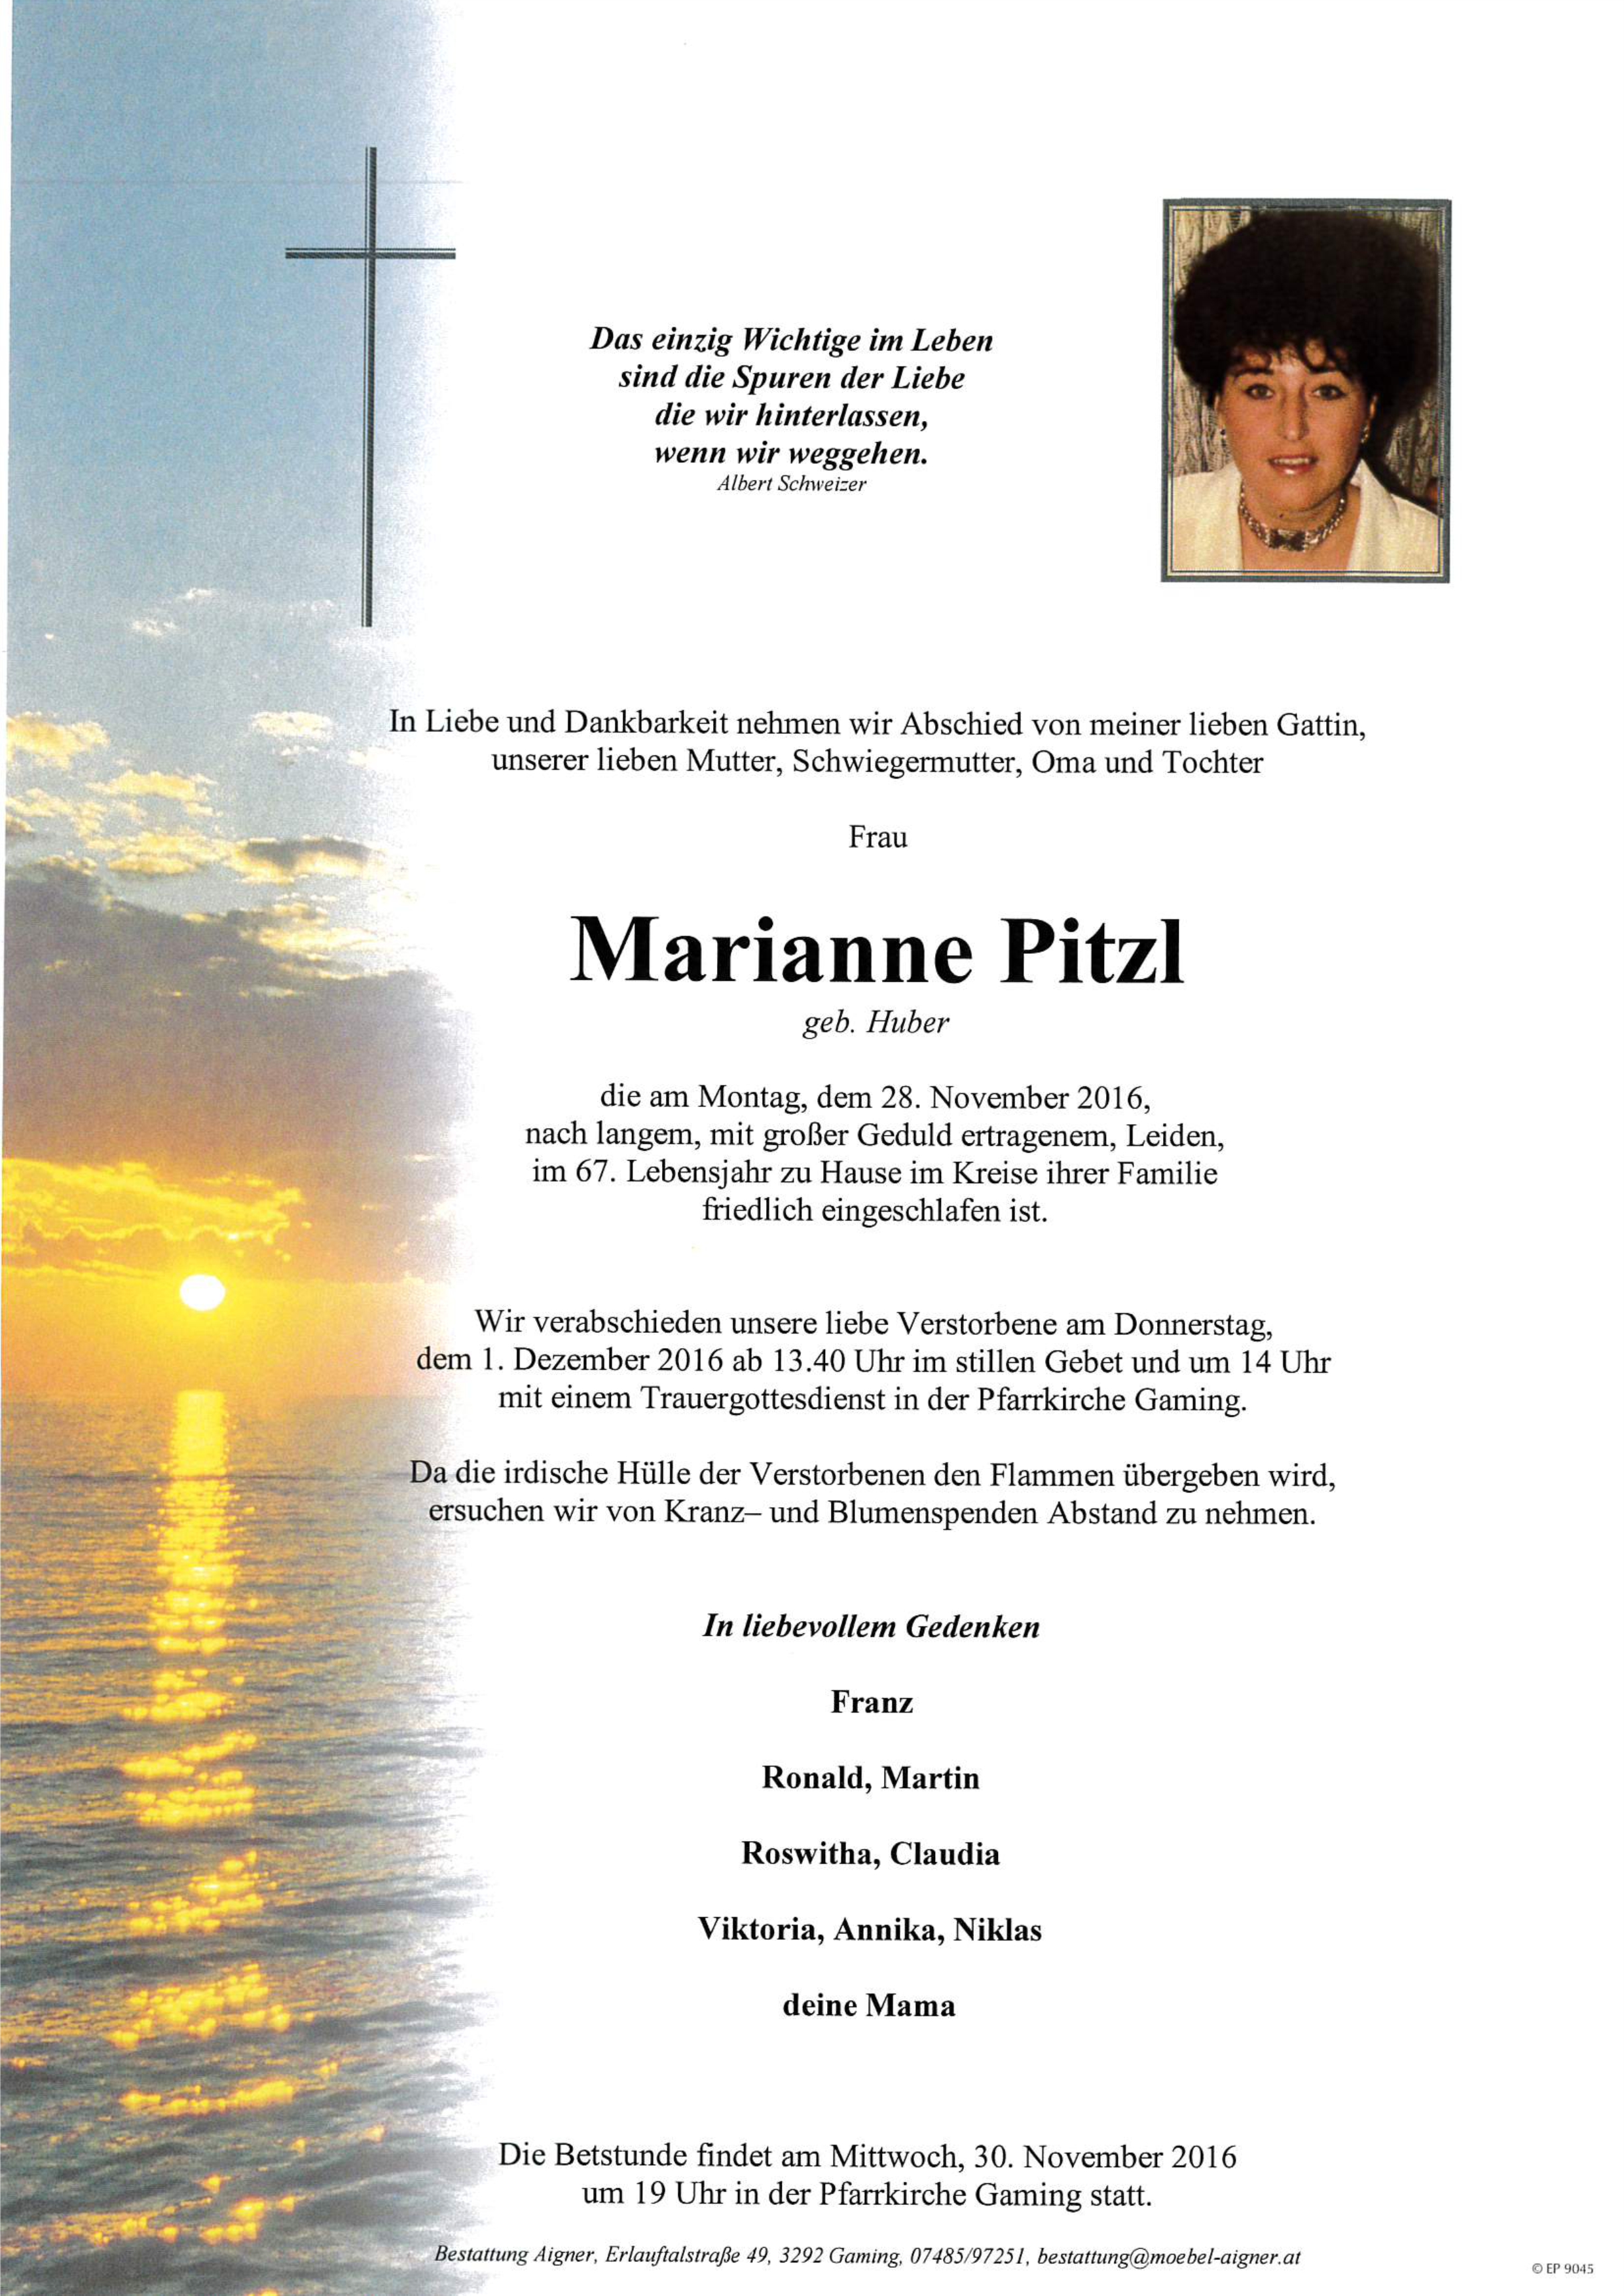 Marianne Pitzl